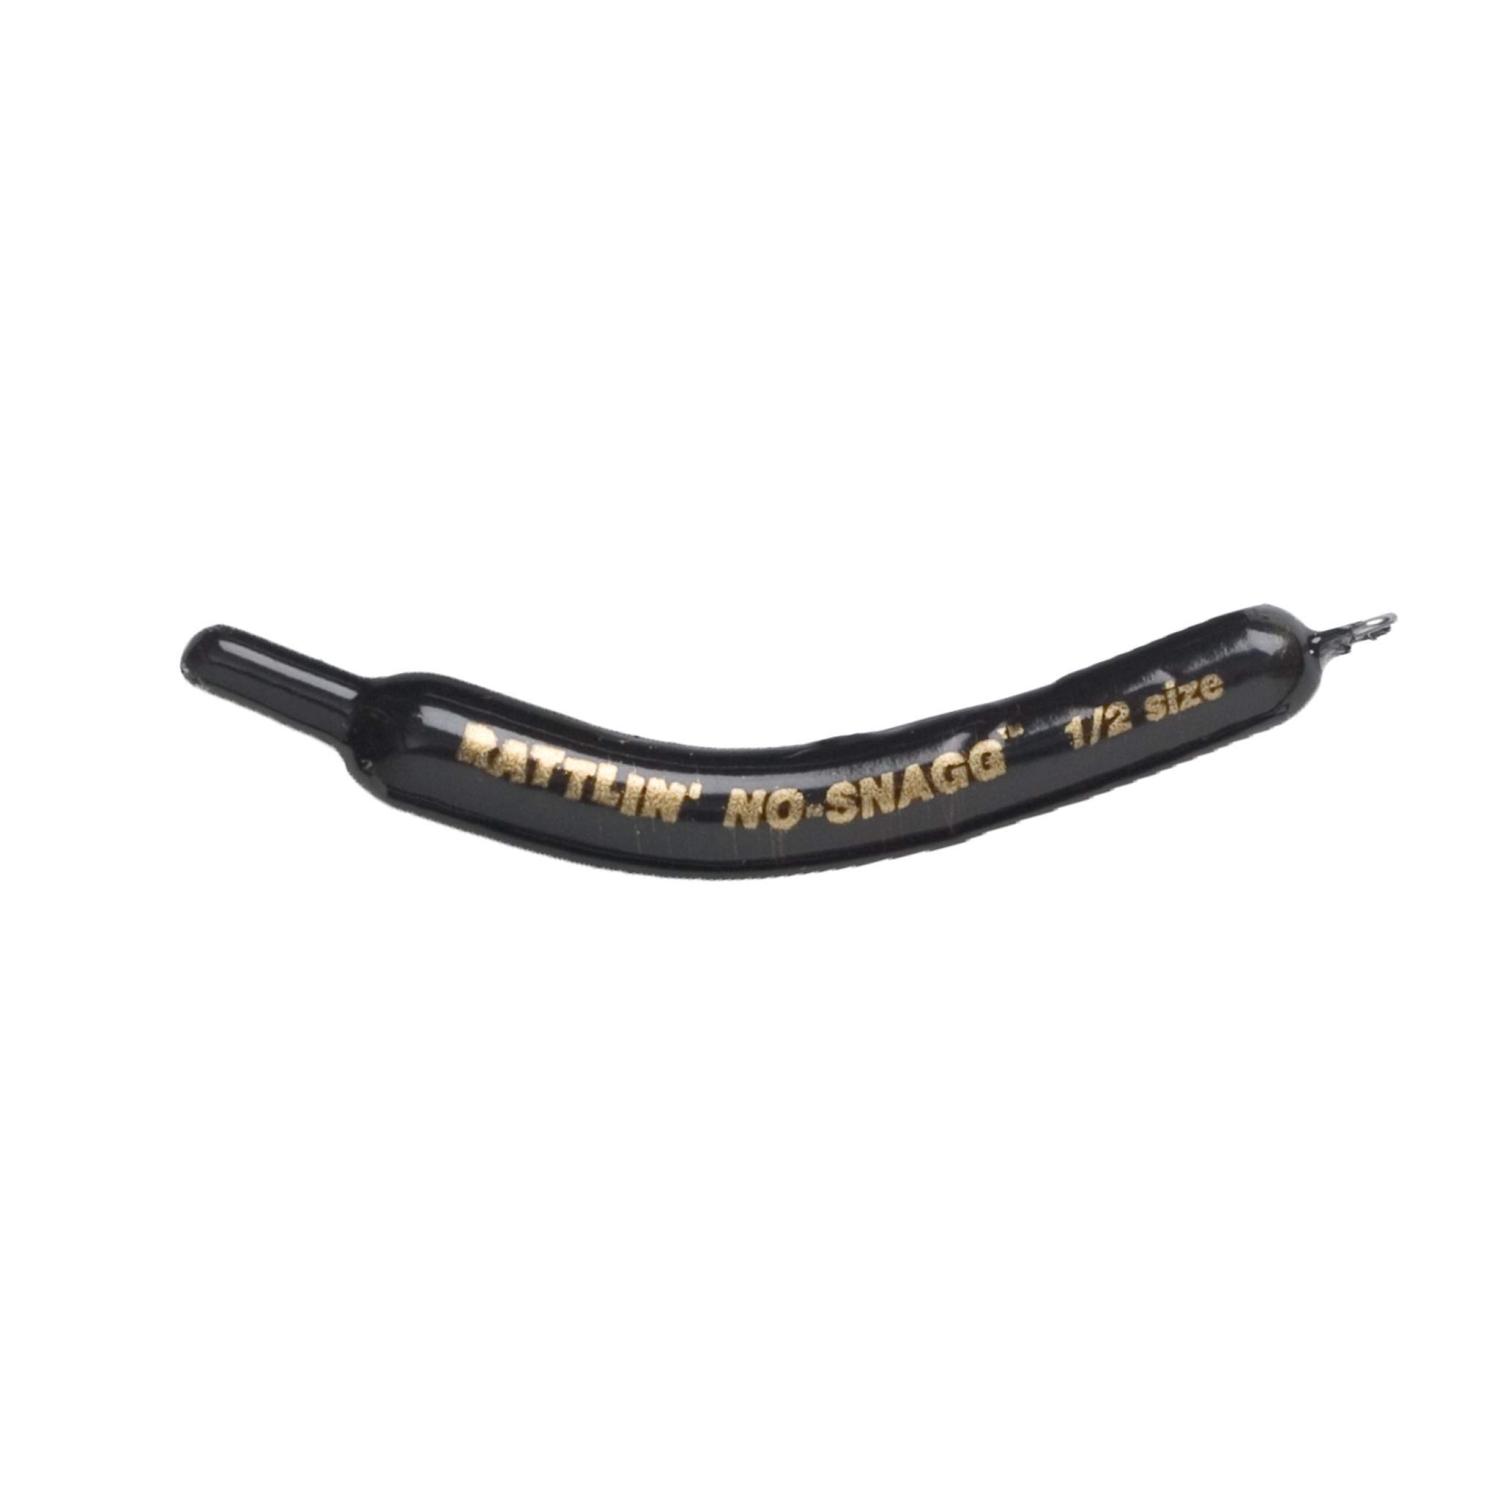 Lindy No-Snagg Slip Sinker Banana-Shaped Fishing Sinker - Enables